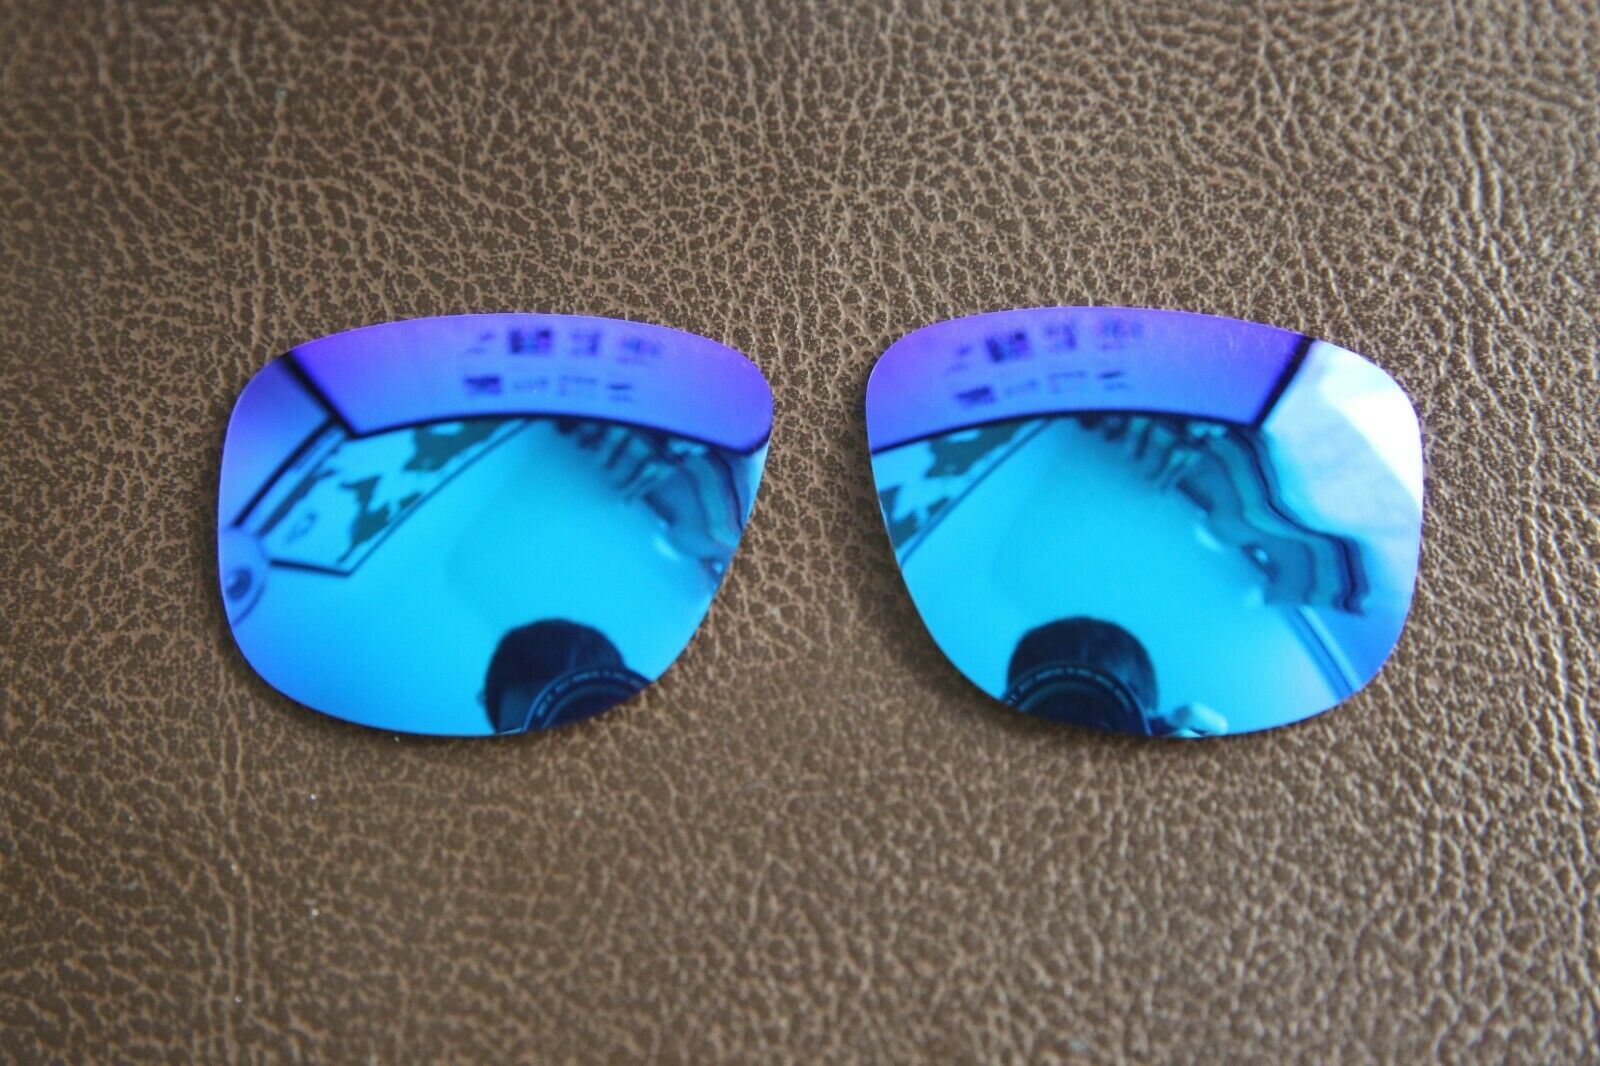 Buy Oakley Men Polarized Blue Lens Square Sunglasses - 0OO9417 at Amazon.in